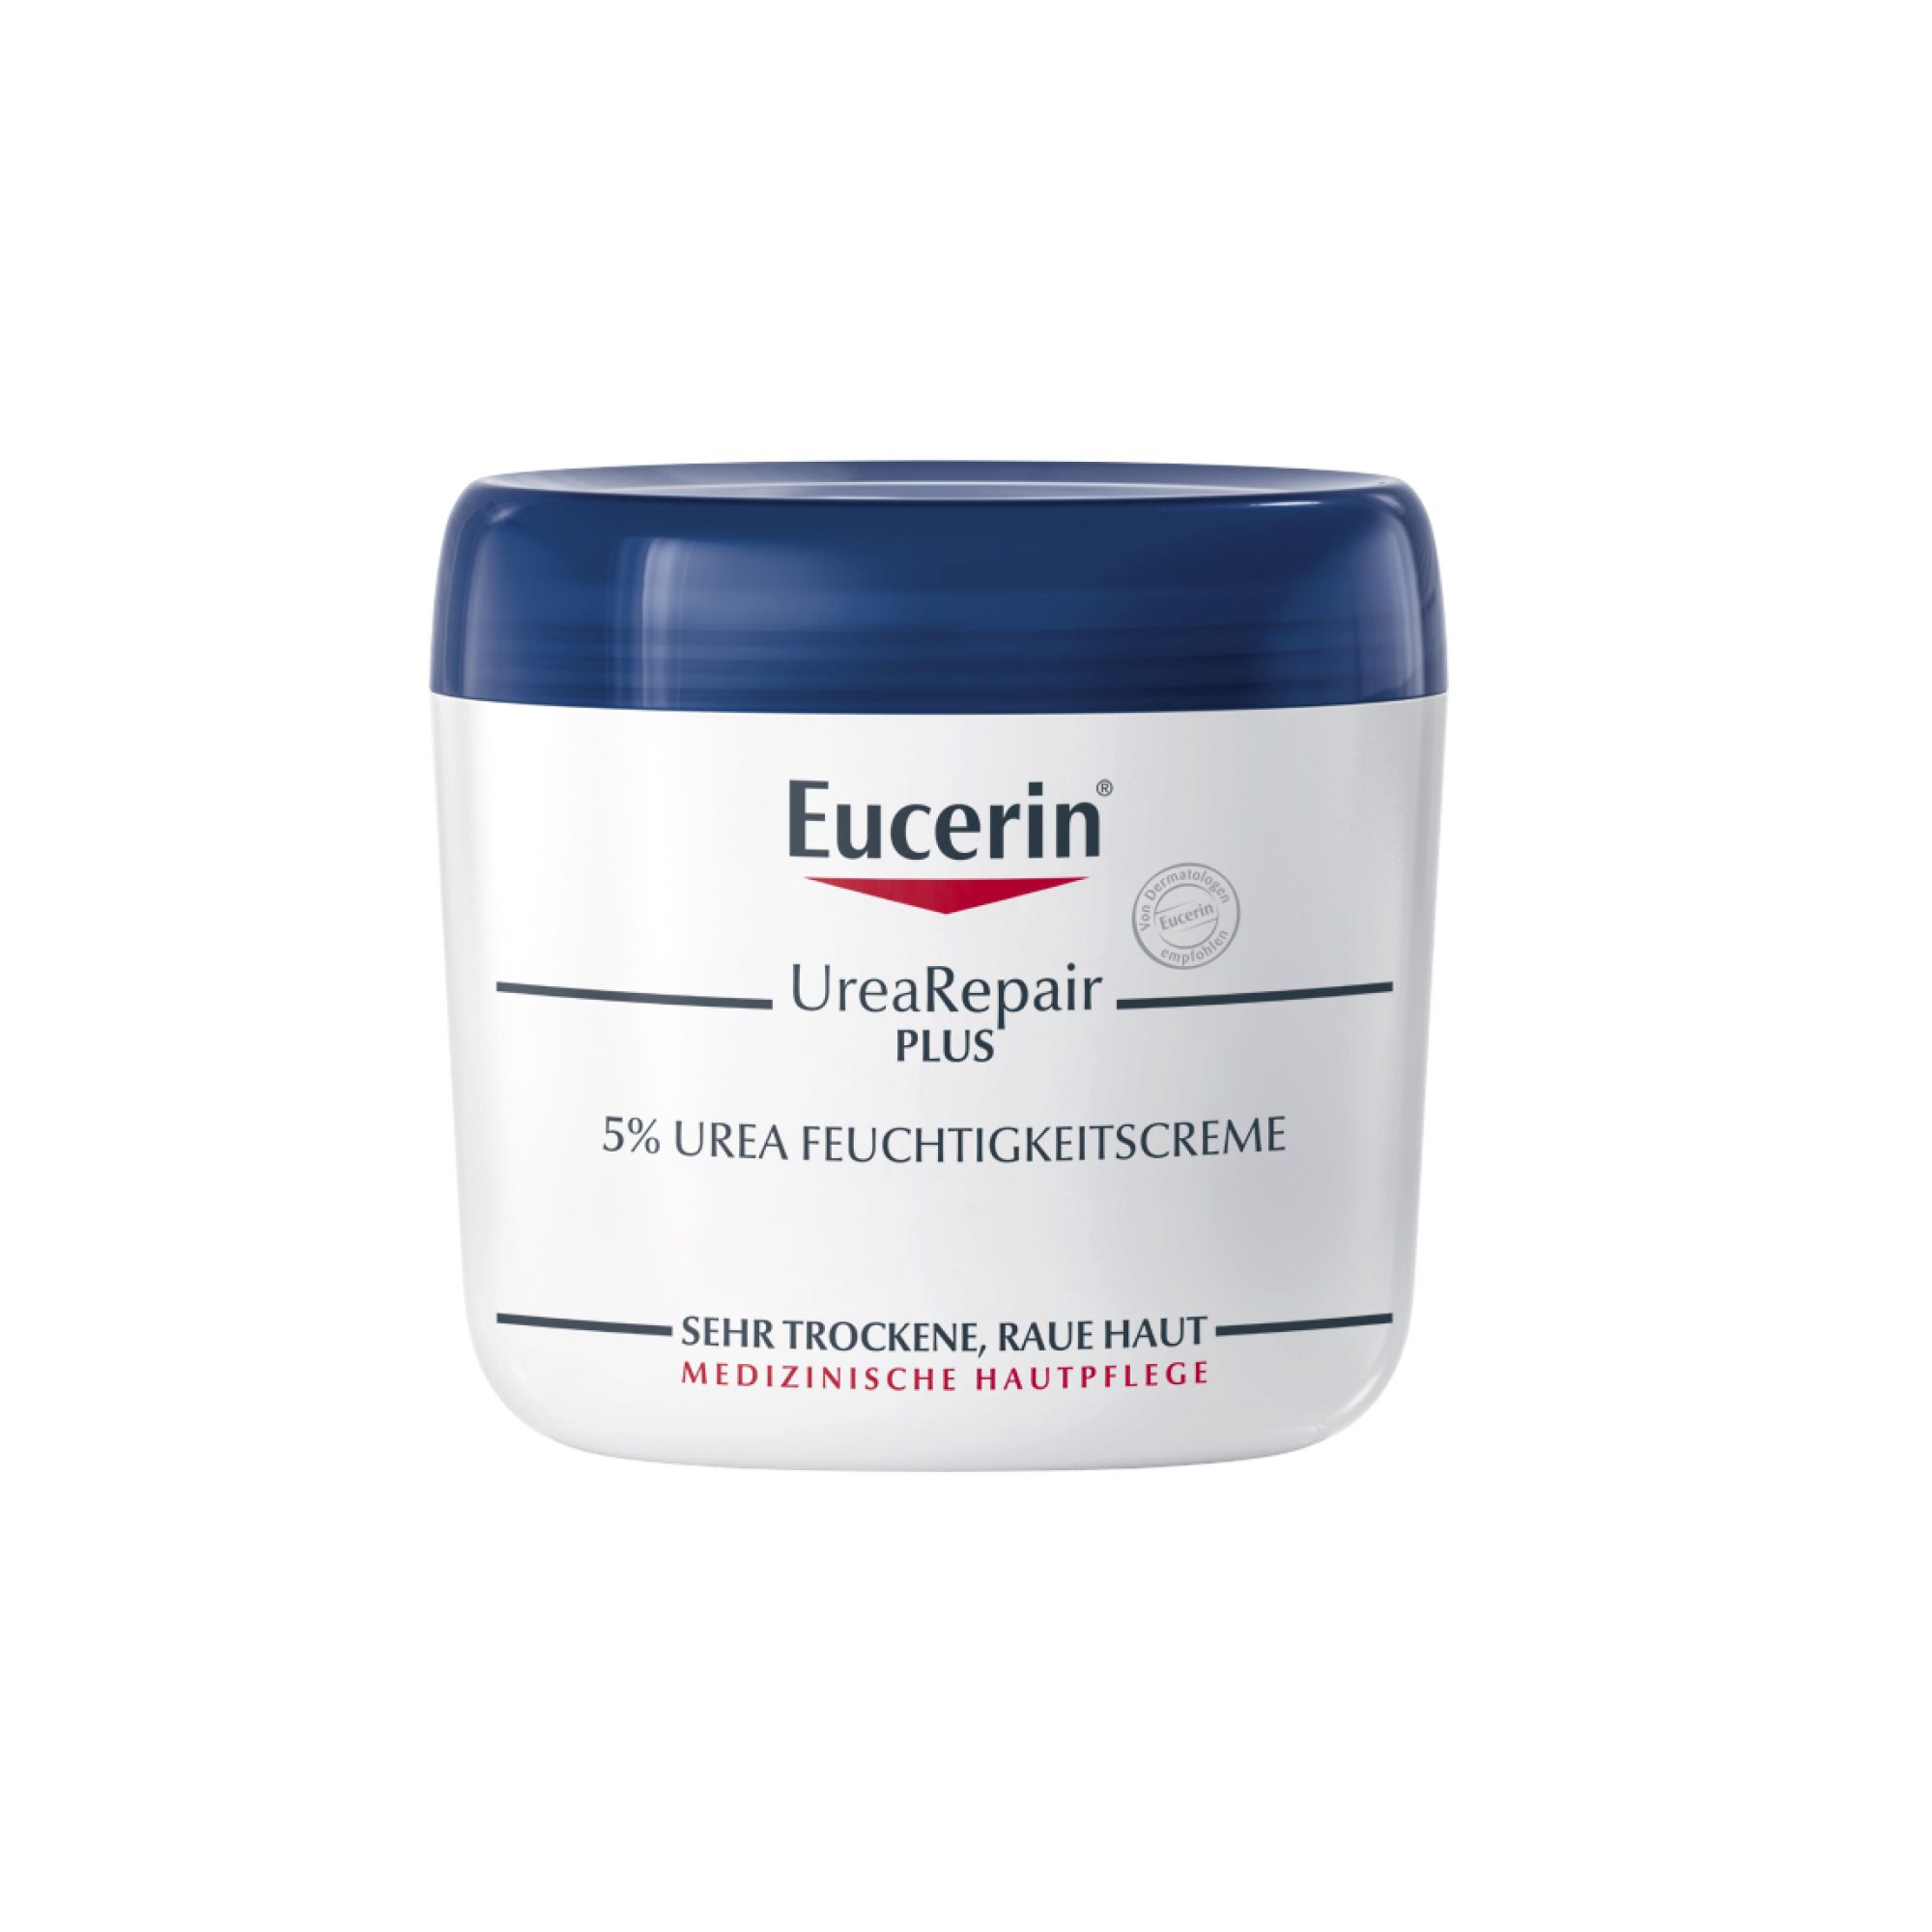 Eucerin® UreaRepair PLUS Feuchtigkeitscreme 5% + Eucerin pH5 Duschgel 50ml GRATIS